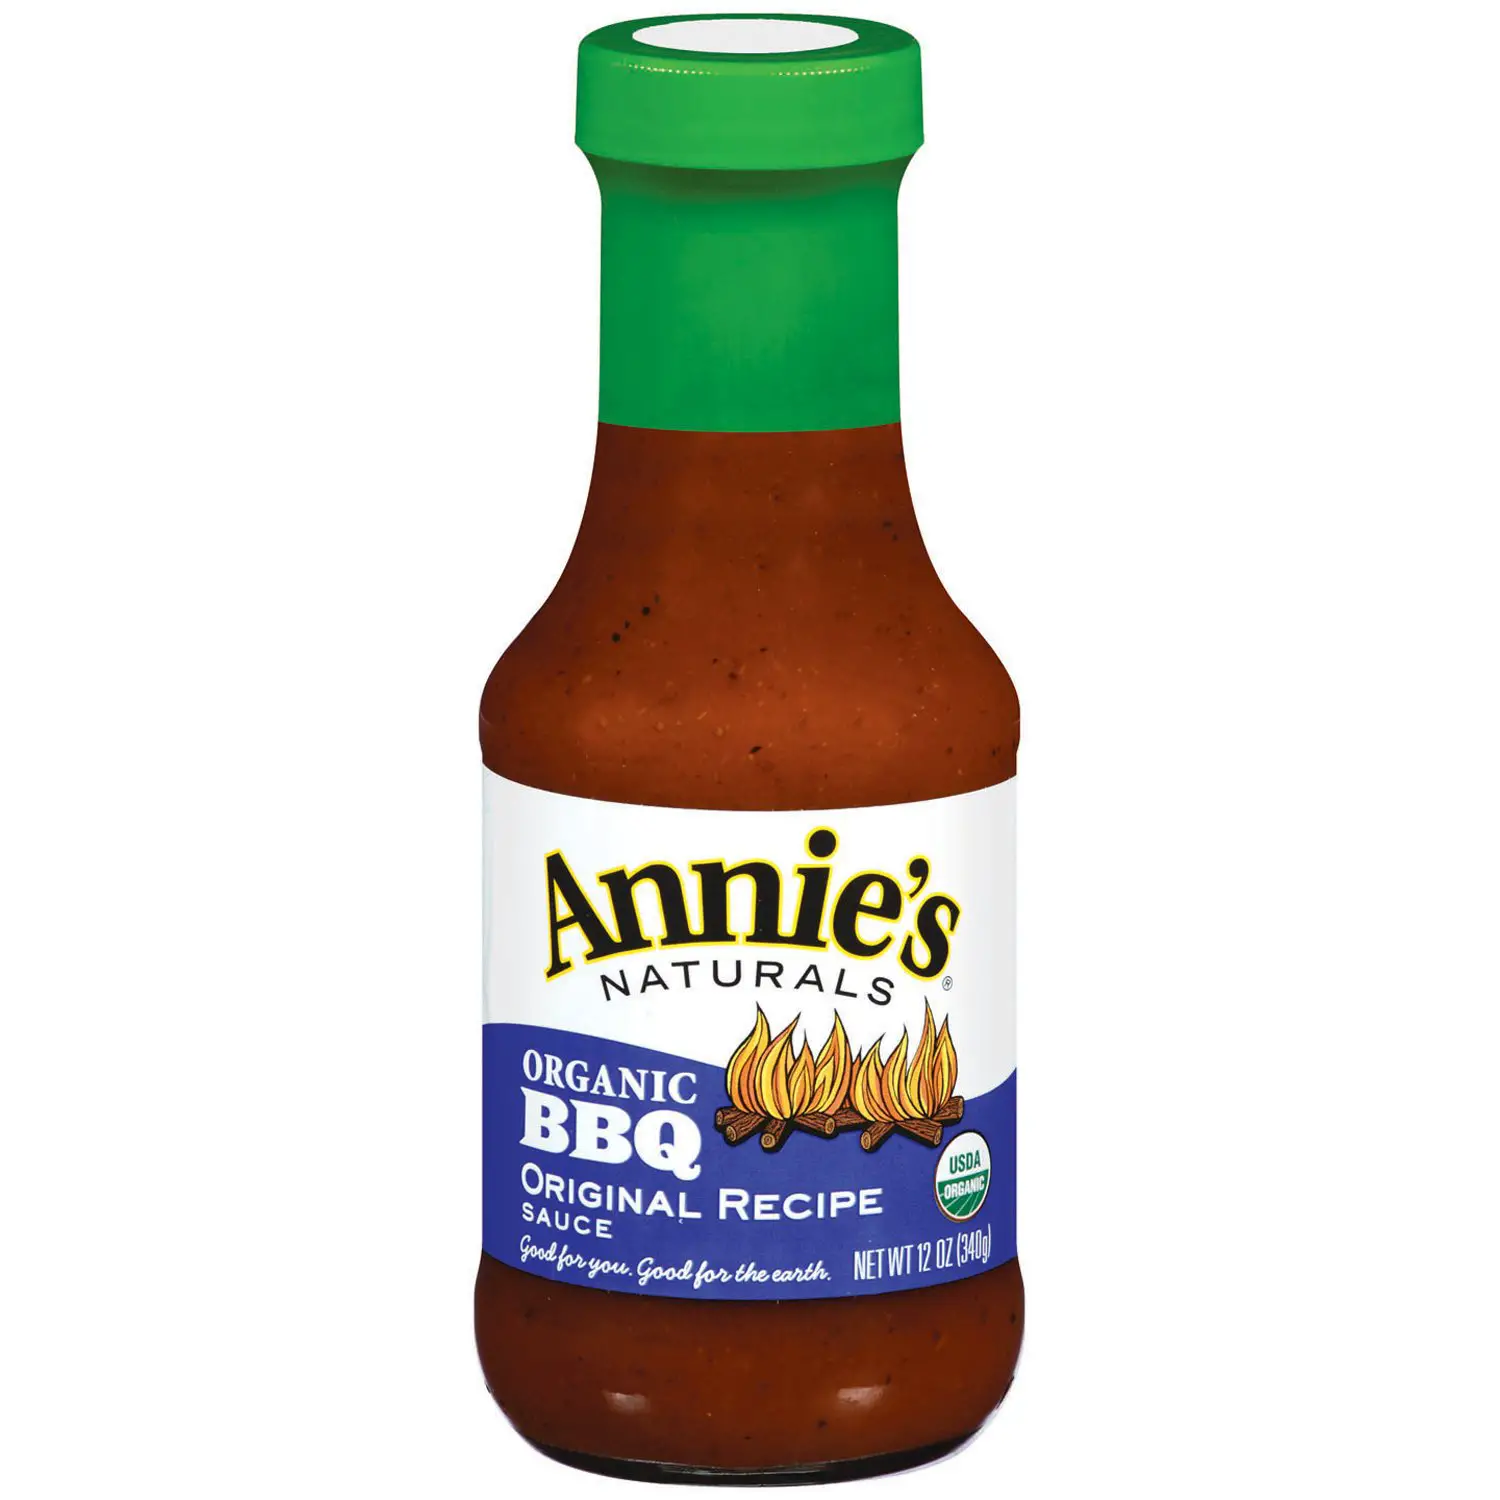 Annies Organic Gluten Free BBQ Original Recipe Sauce, 12 oz